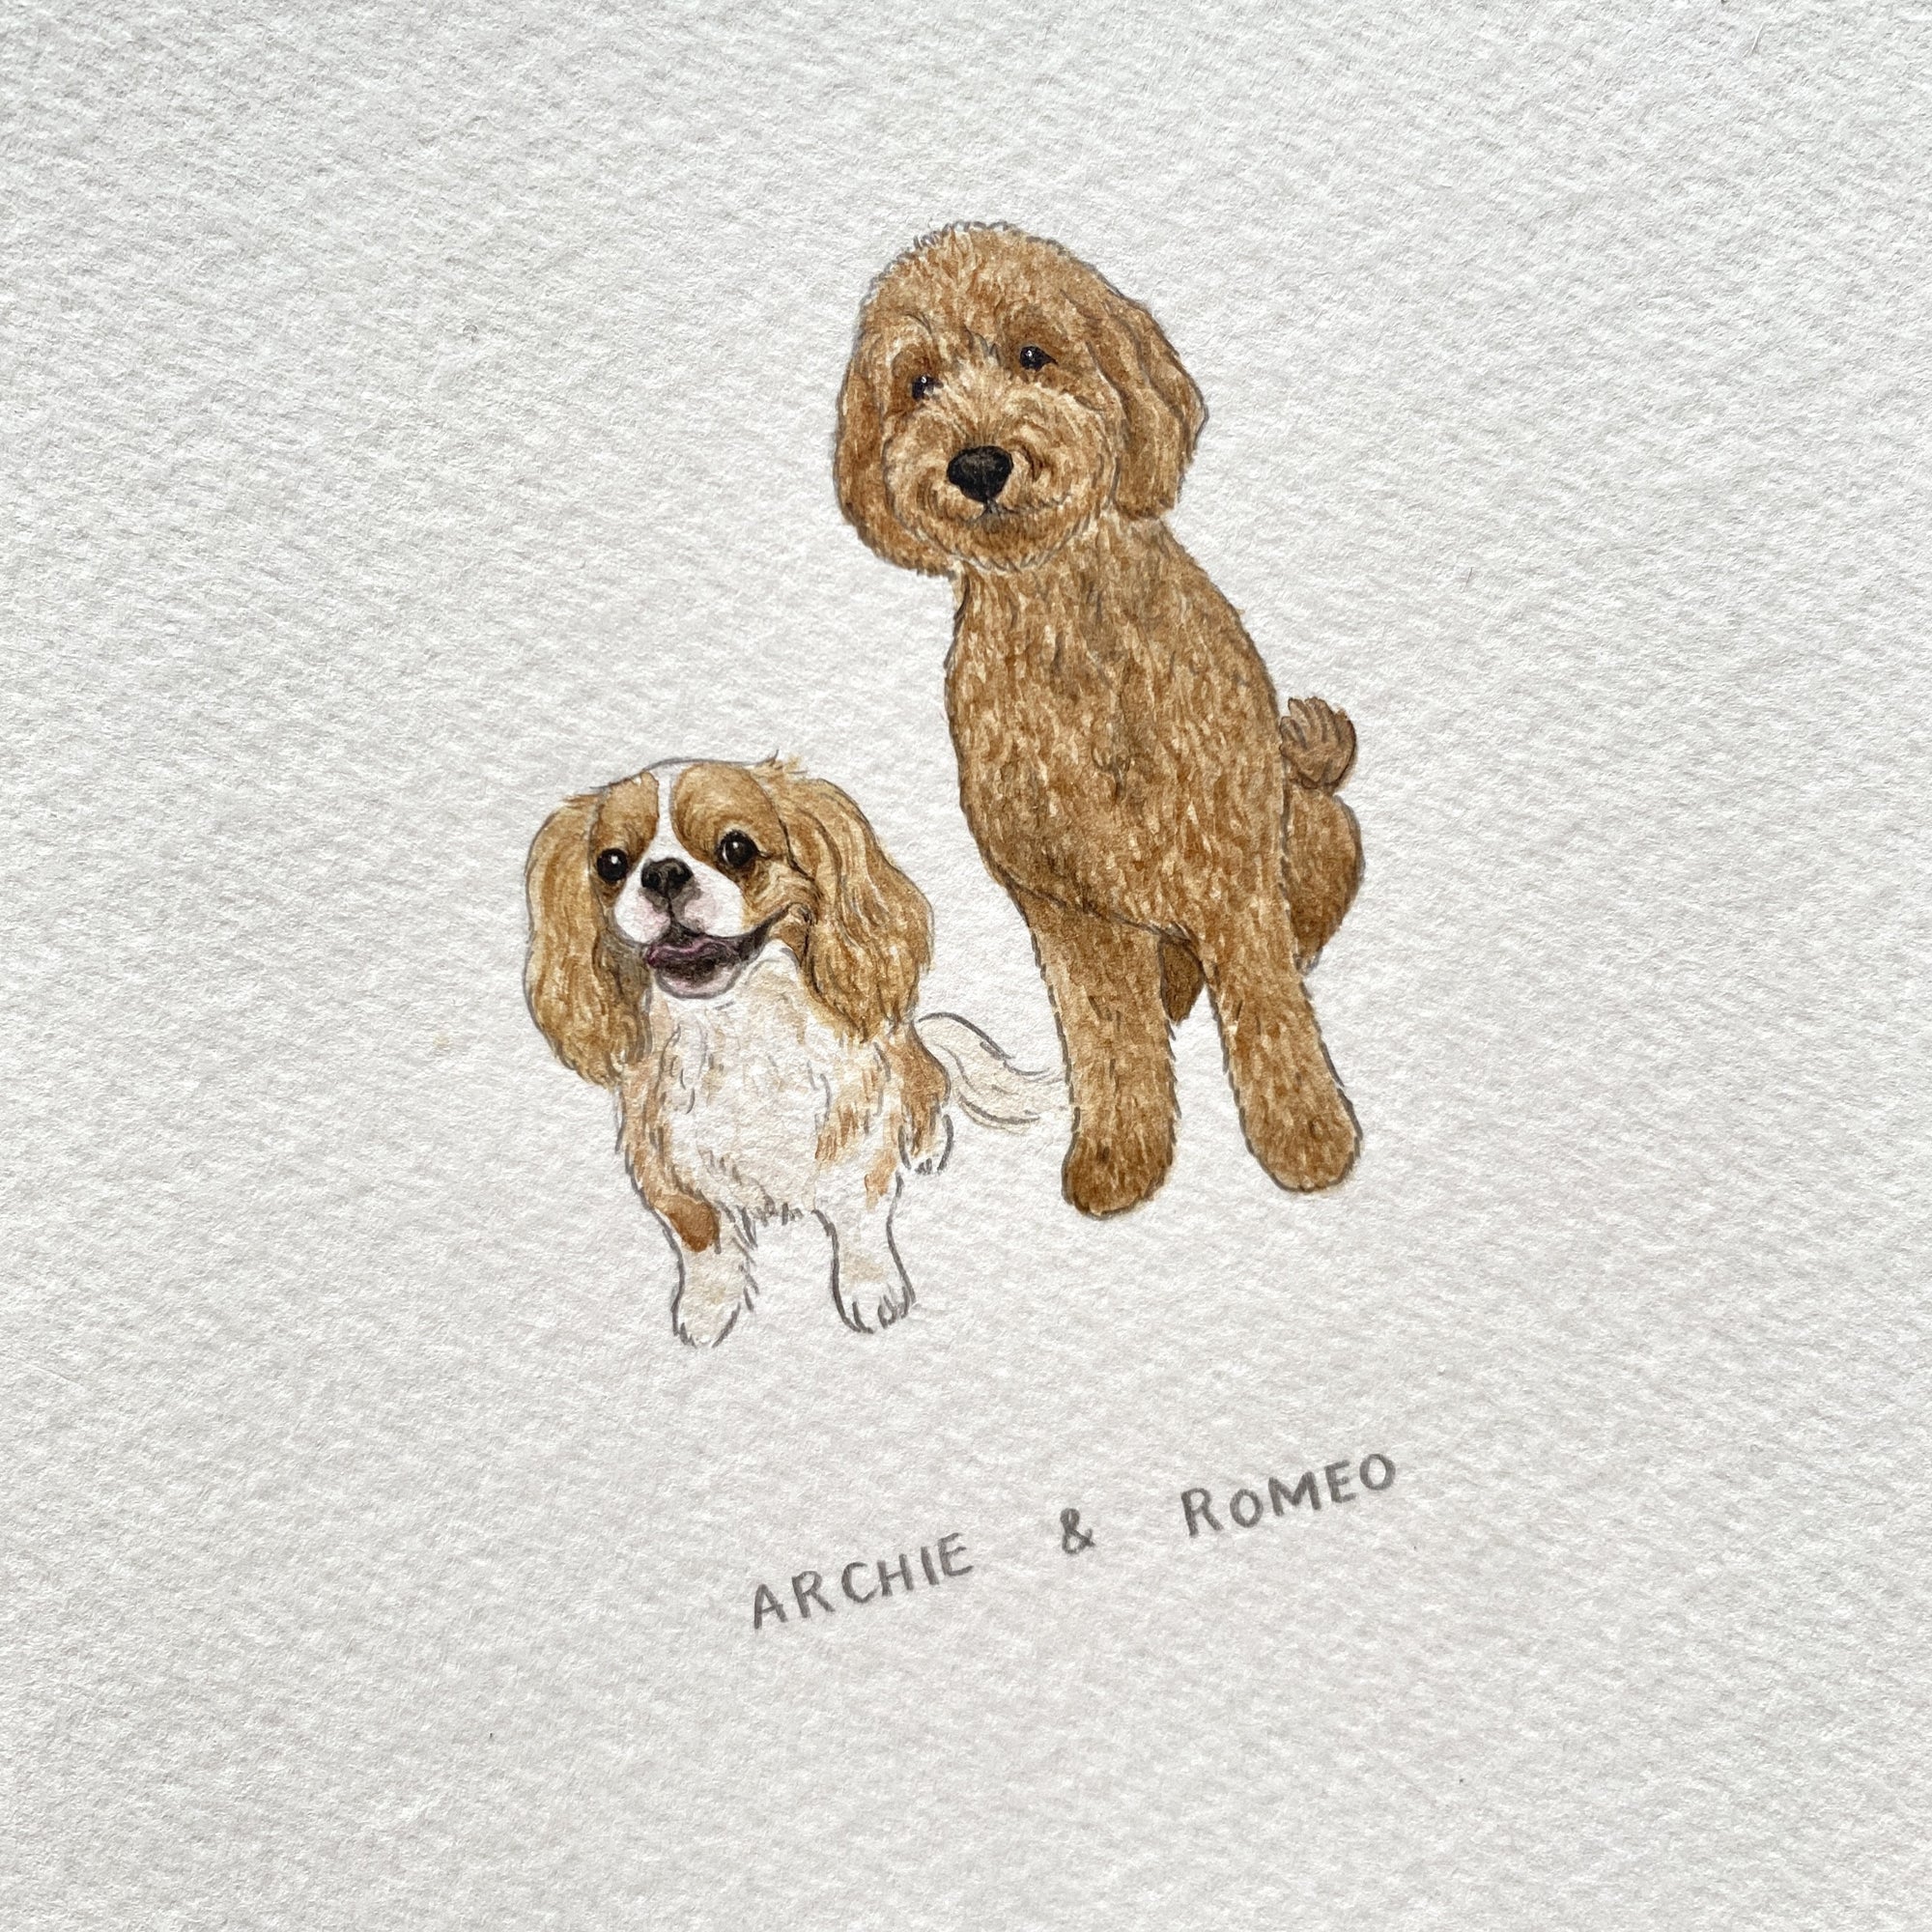 Small Business Spotlight: Tiny Dog Paintings